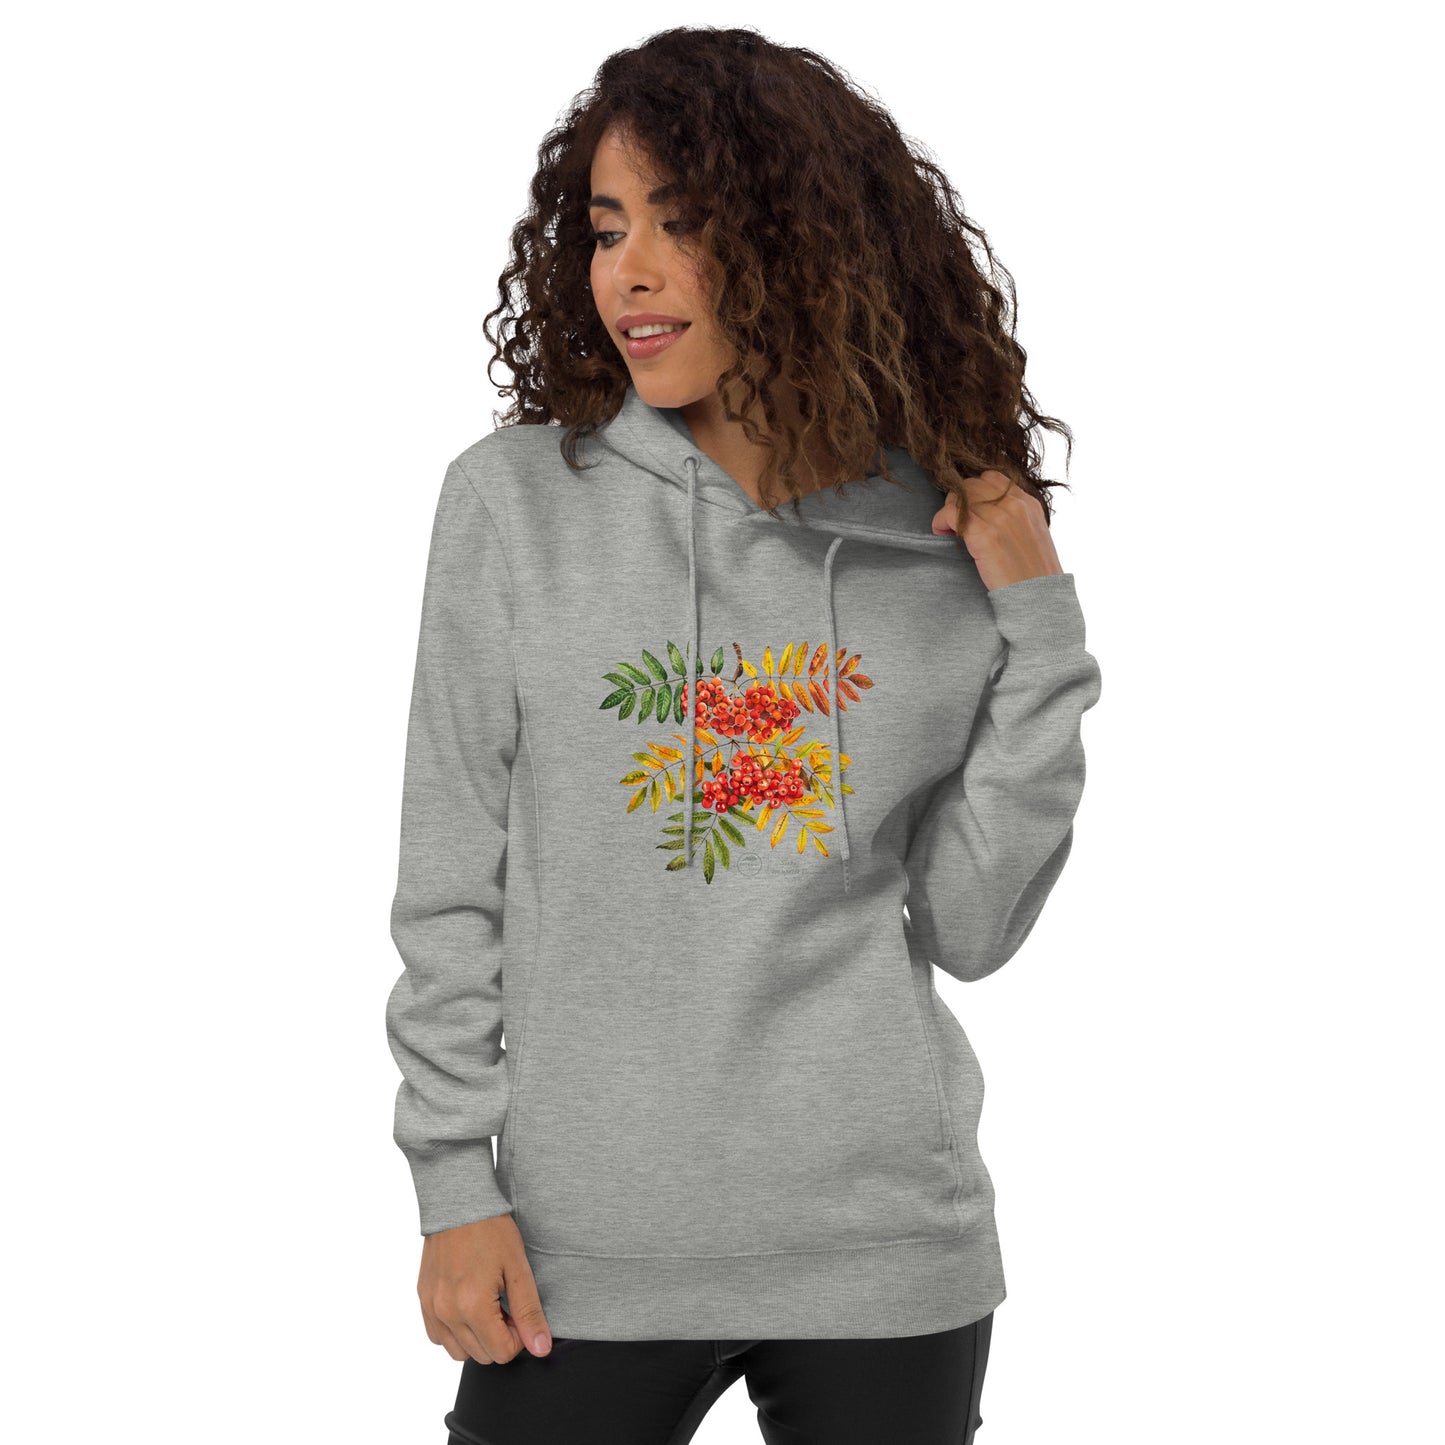 Unisex fashion hoodie - Rowanberry